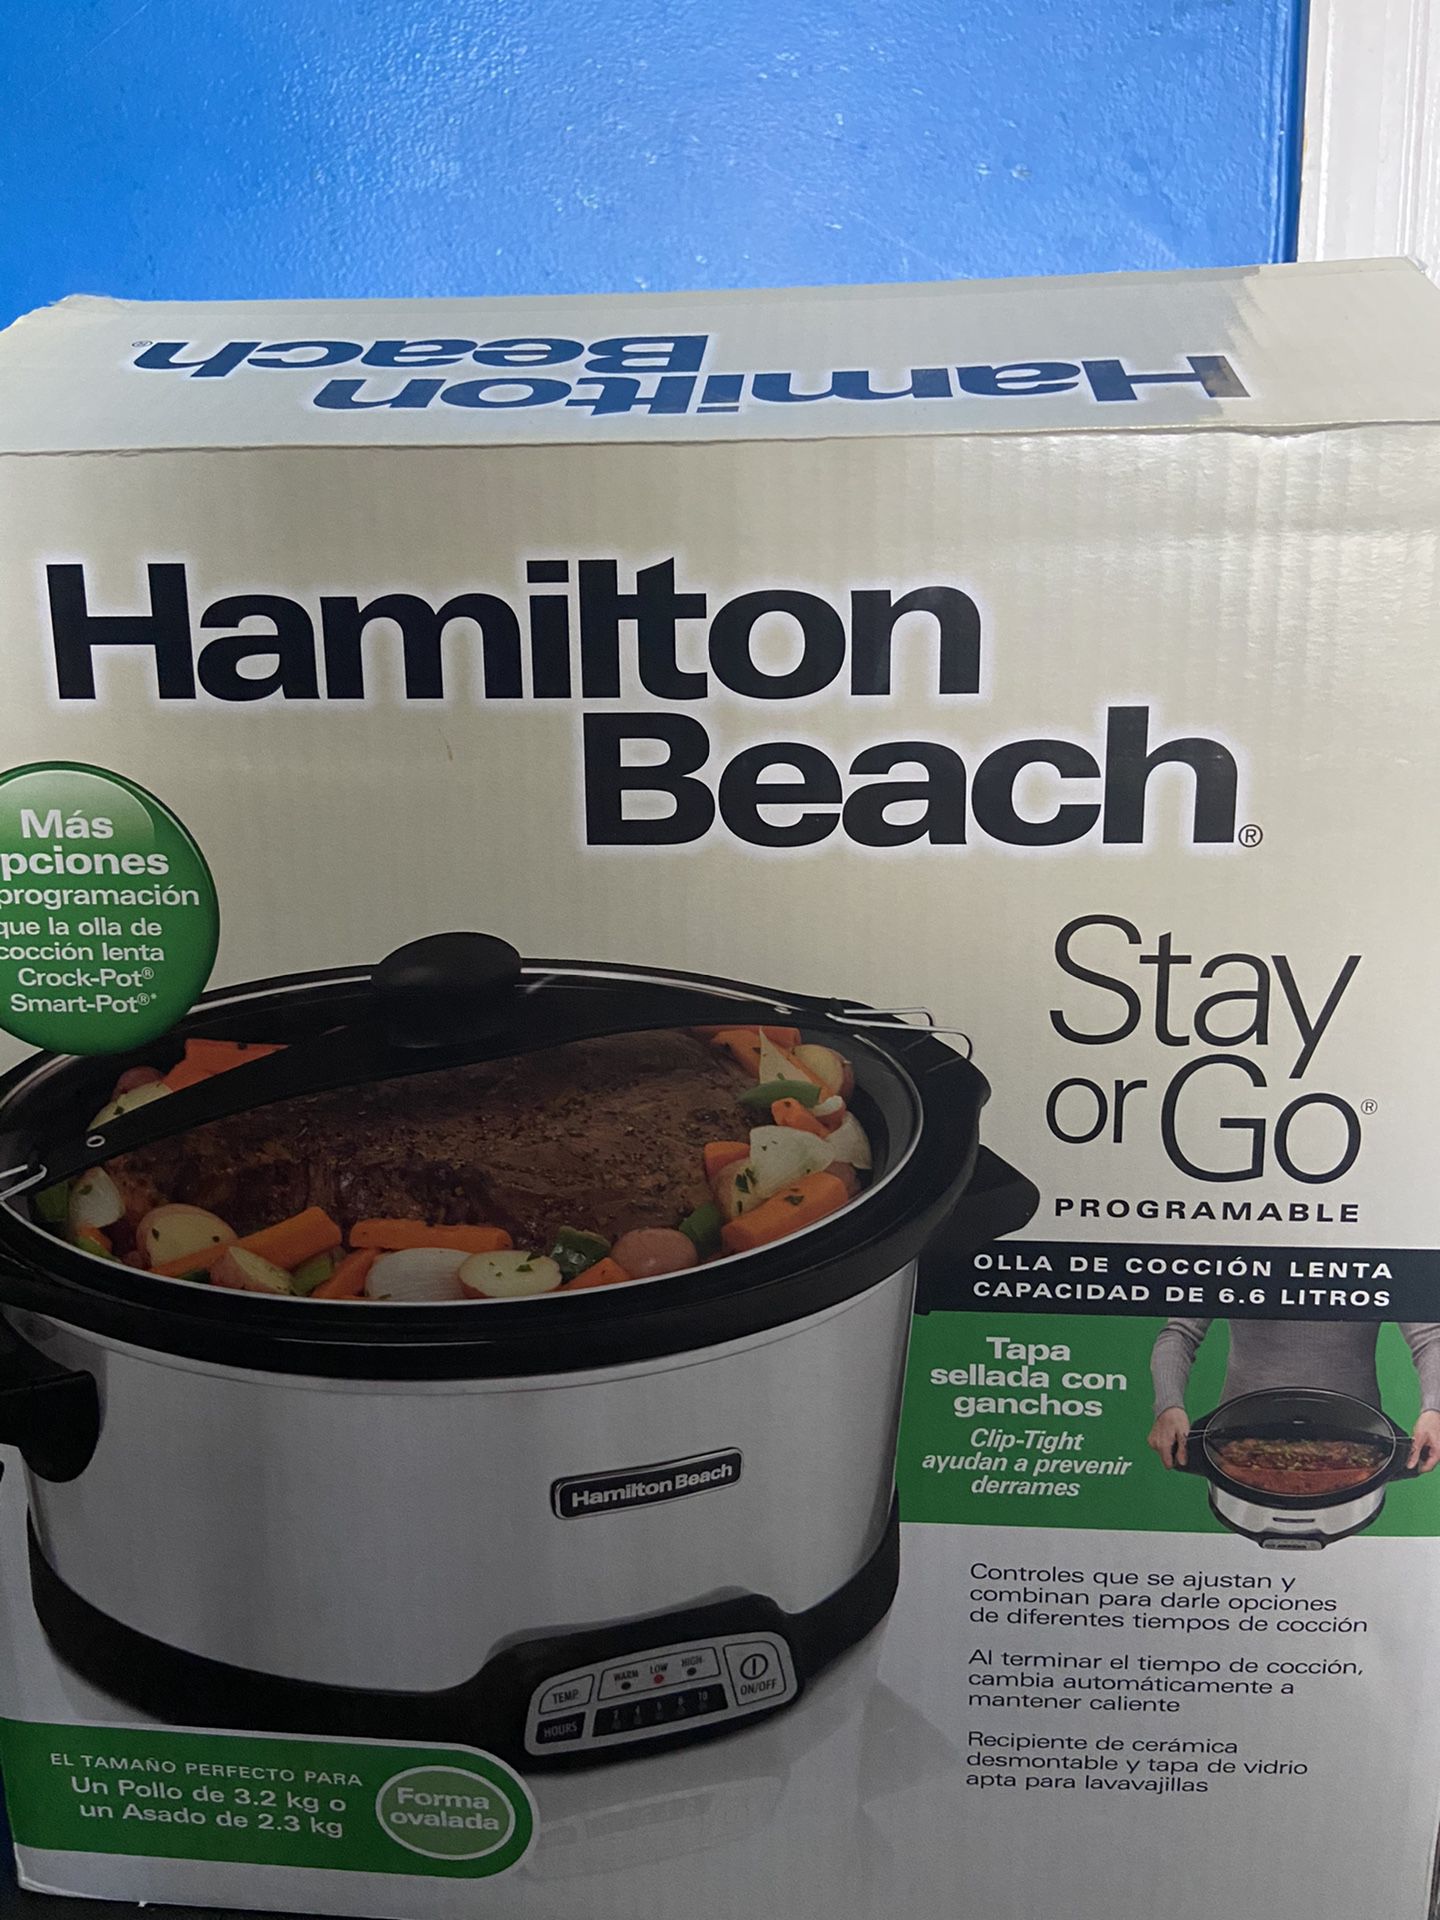 Hamilton Beach slow cooker